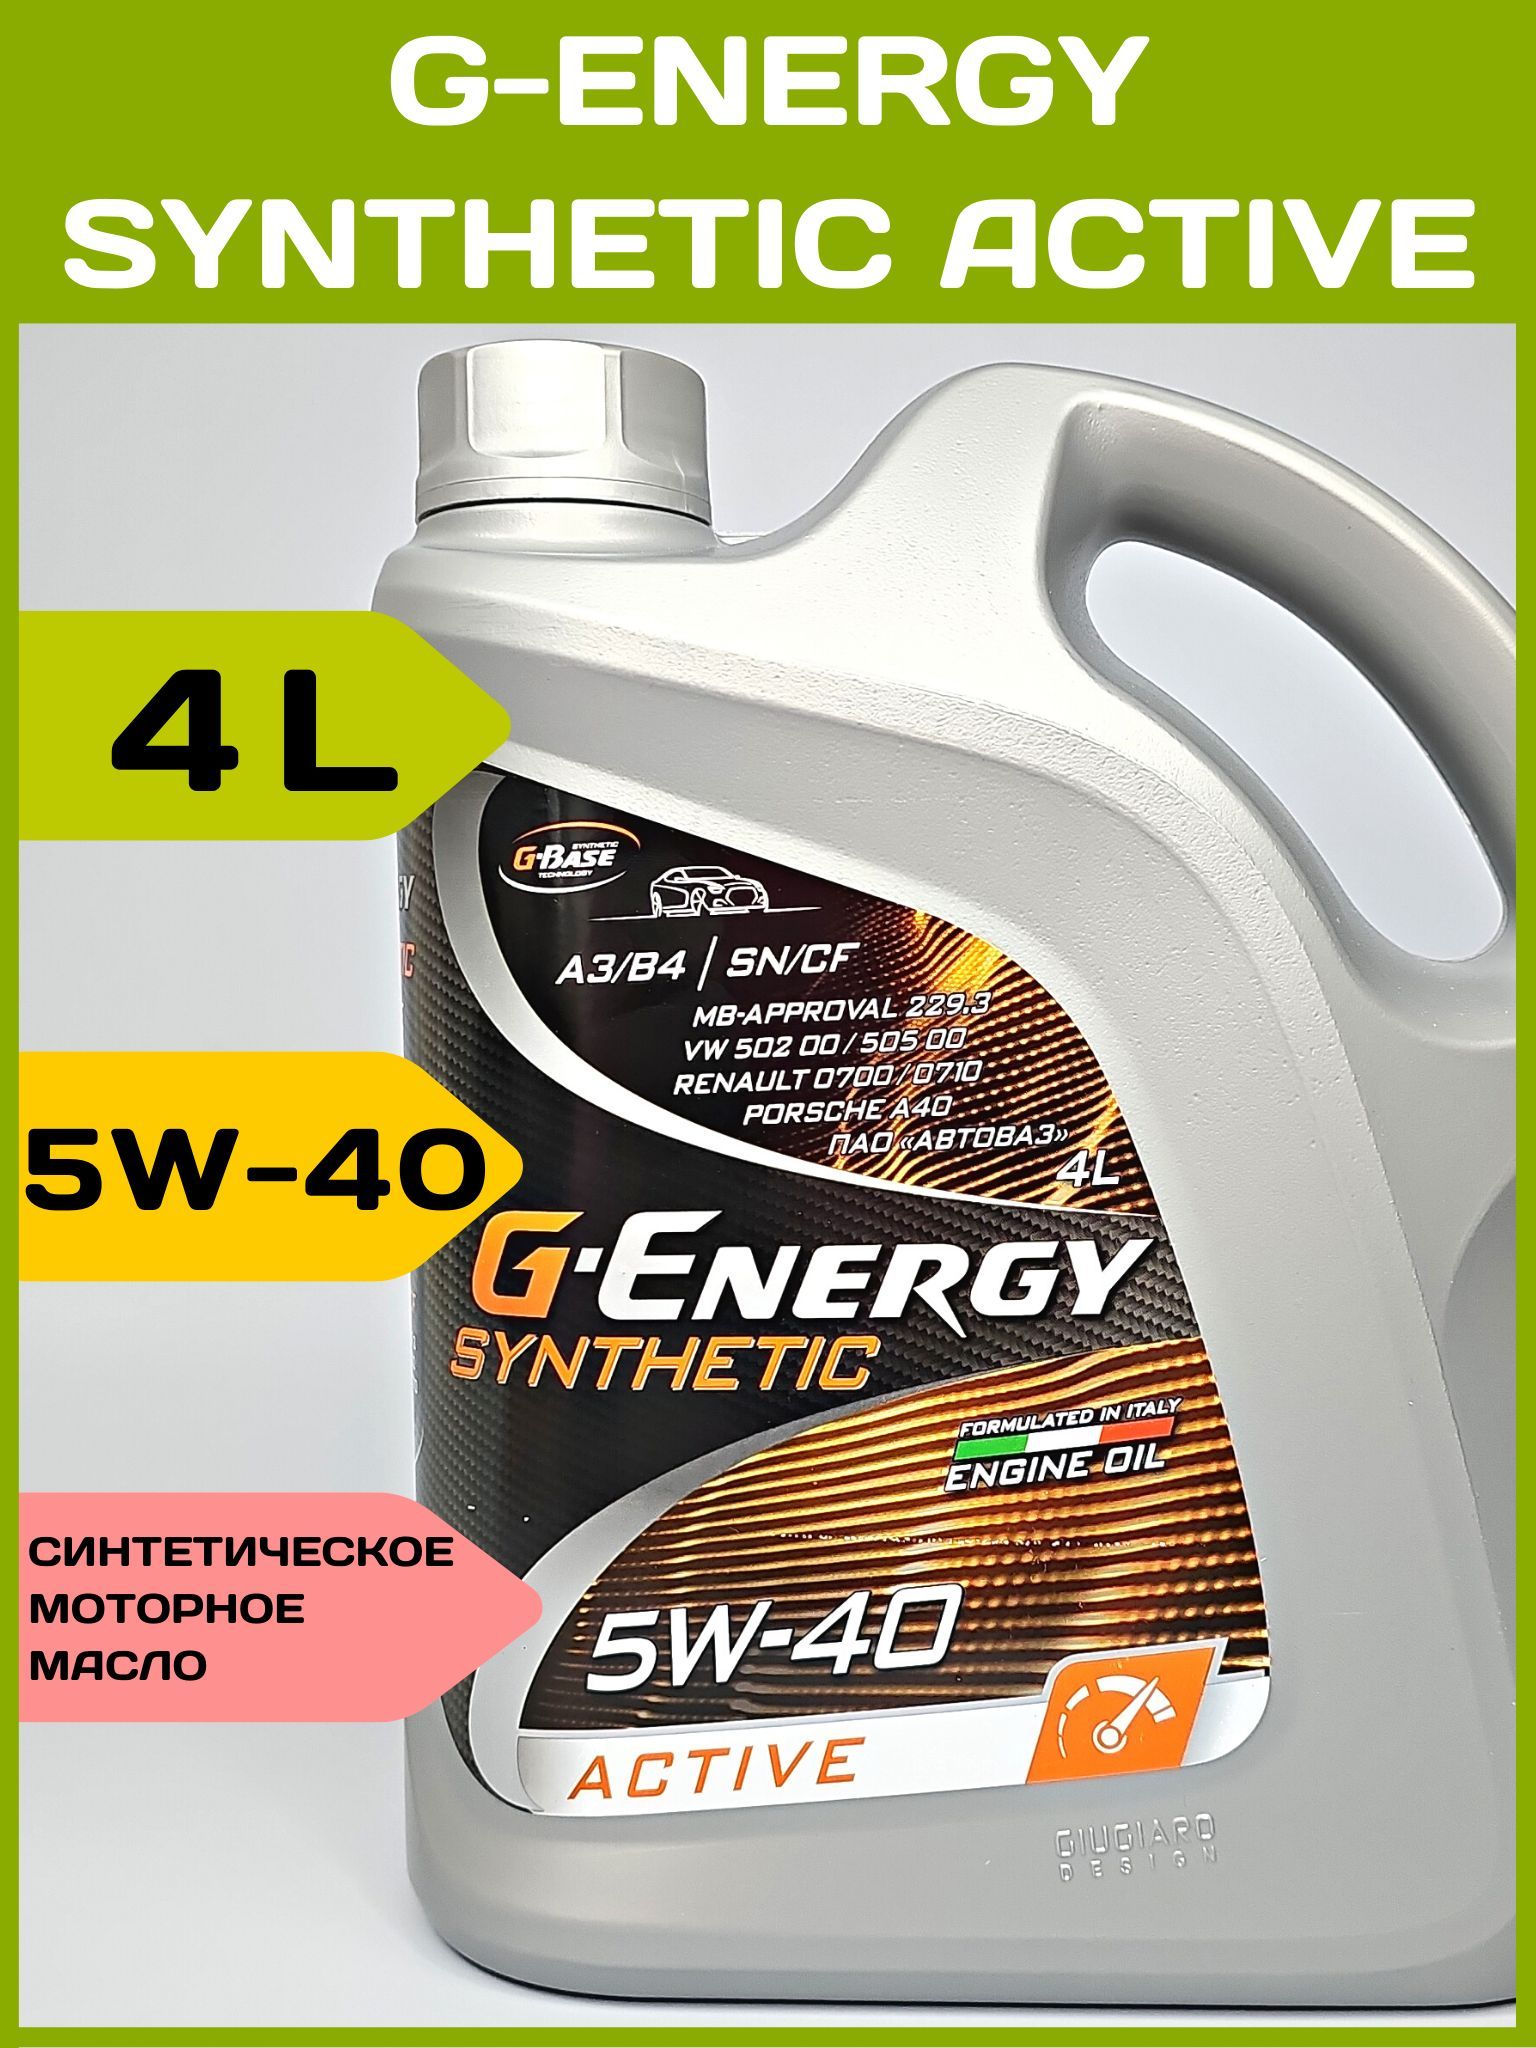 G Energy 5w40 Актив. G-Energy Synthetic Active 5w-40. Масло g Energy 5w40 синтетика. G-Energy Synthetic Active 5w-30. Масло energy 5 40